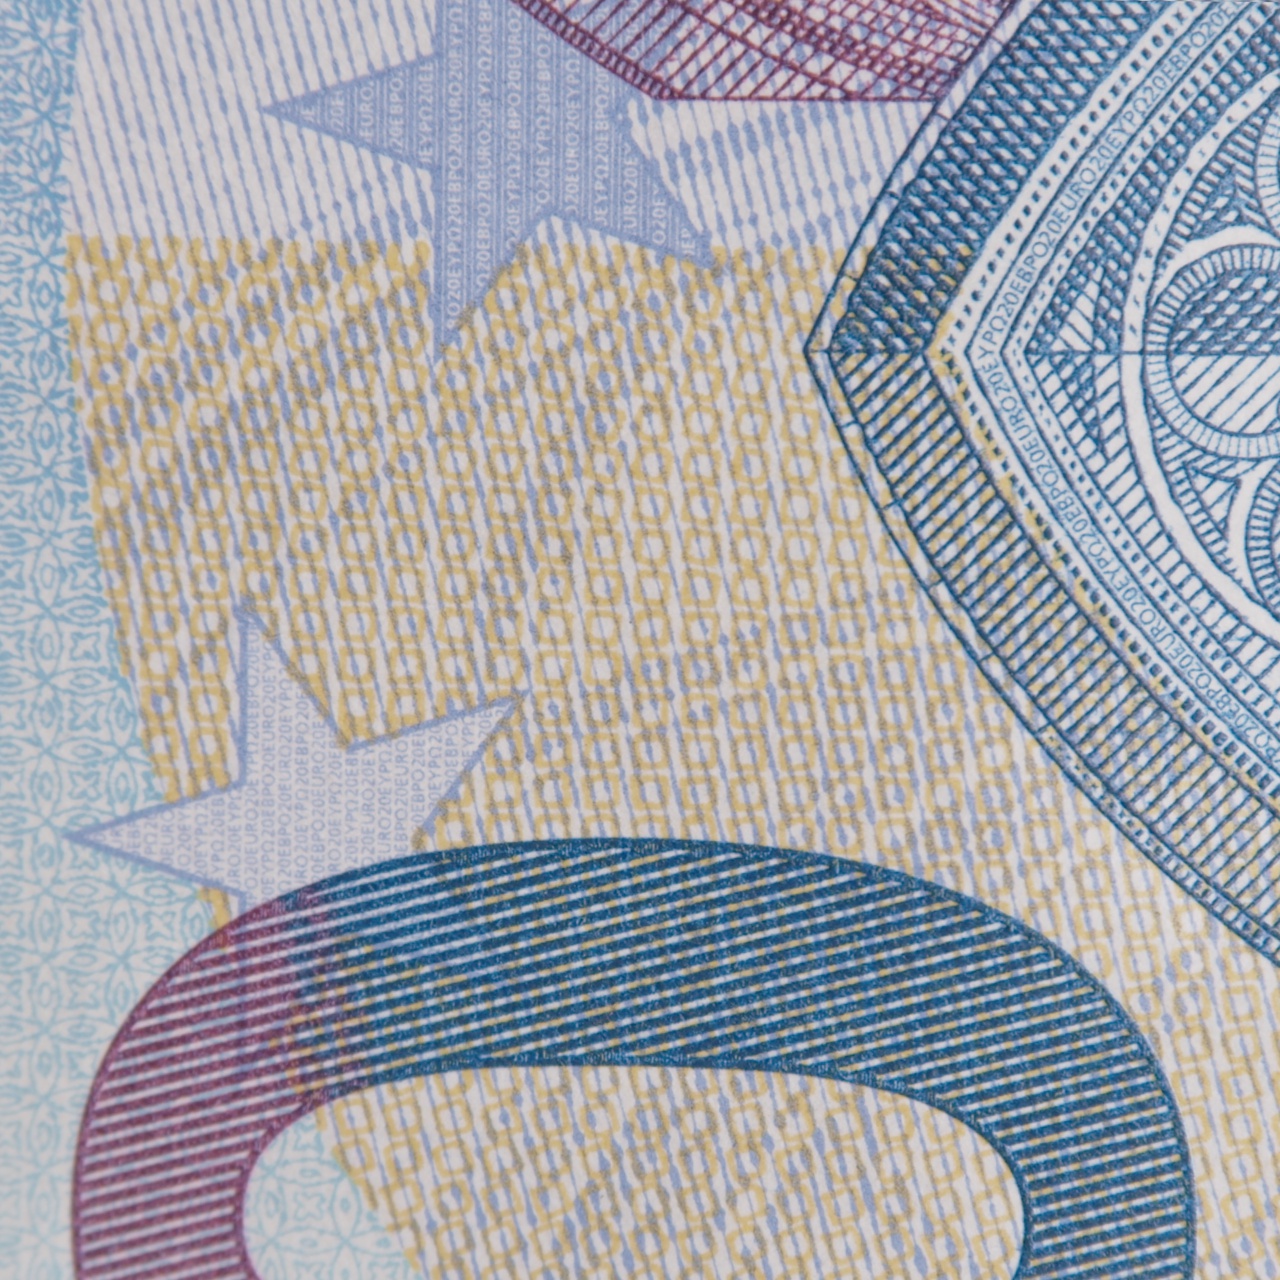 Euro_Banknotes_Detail_closer_Macro.jpg